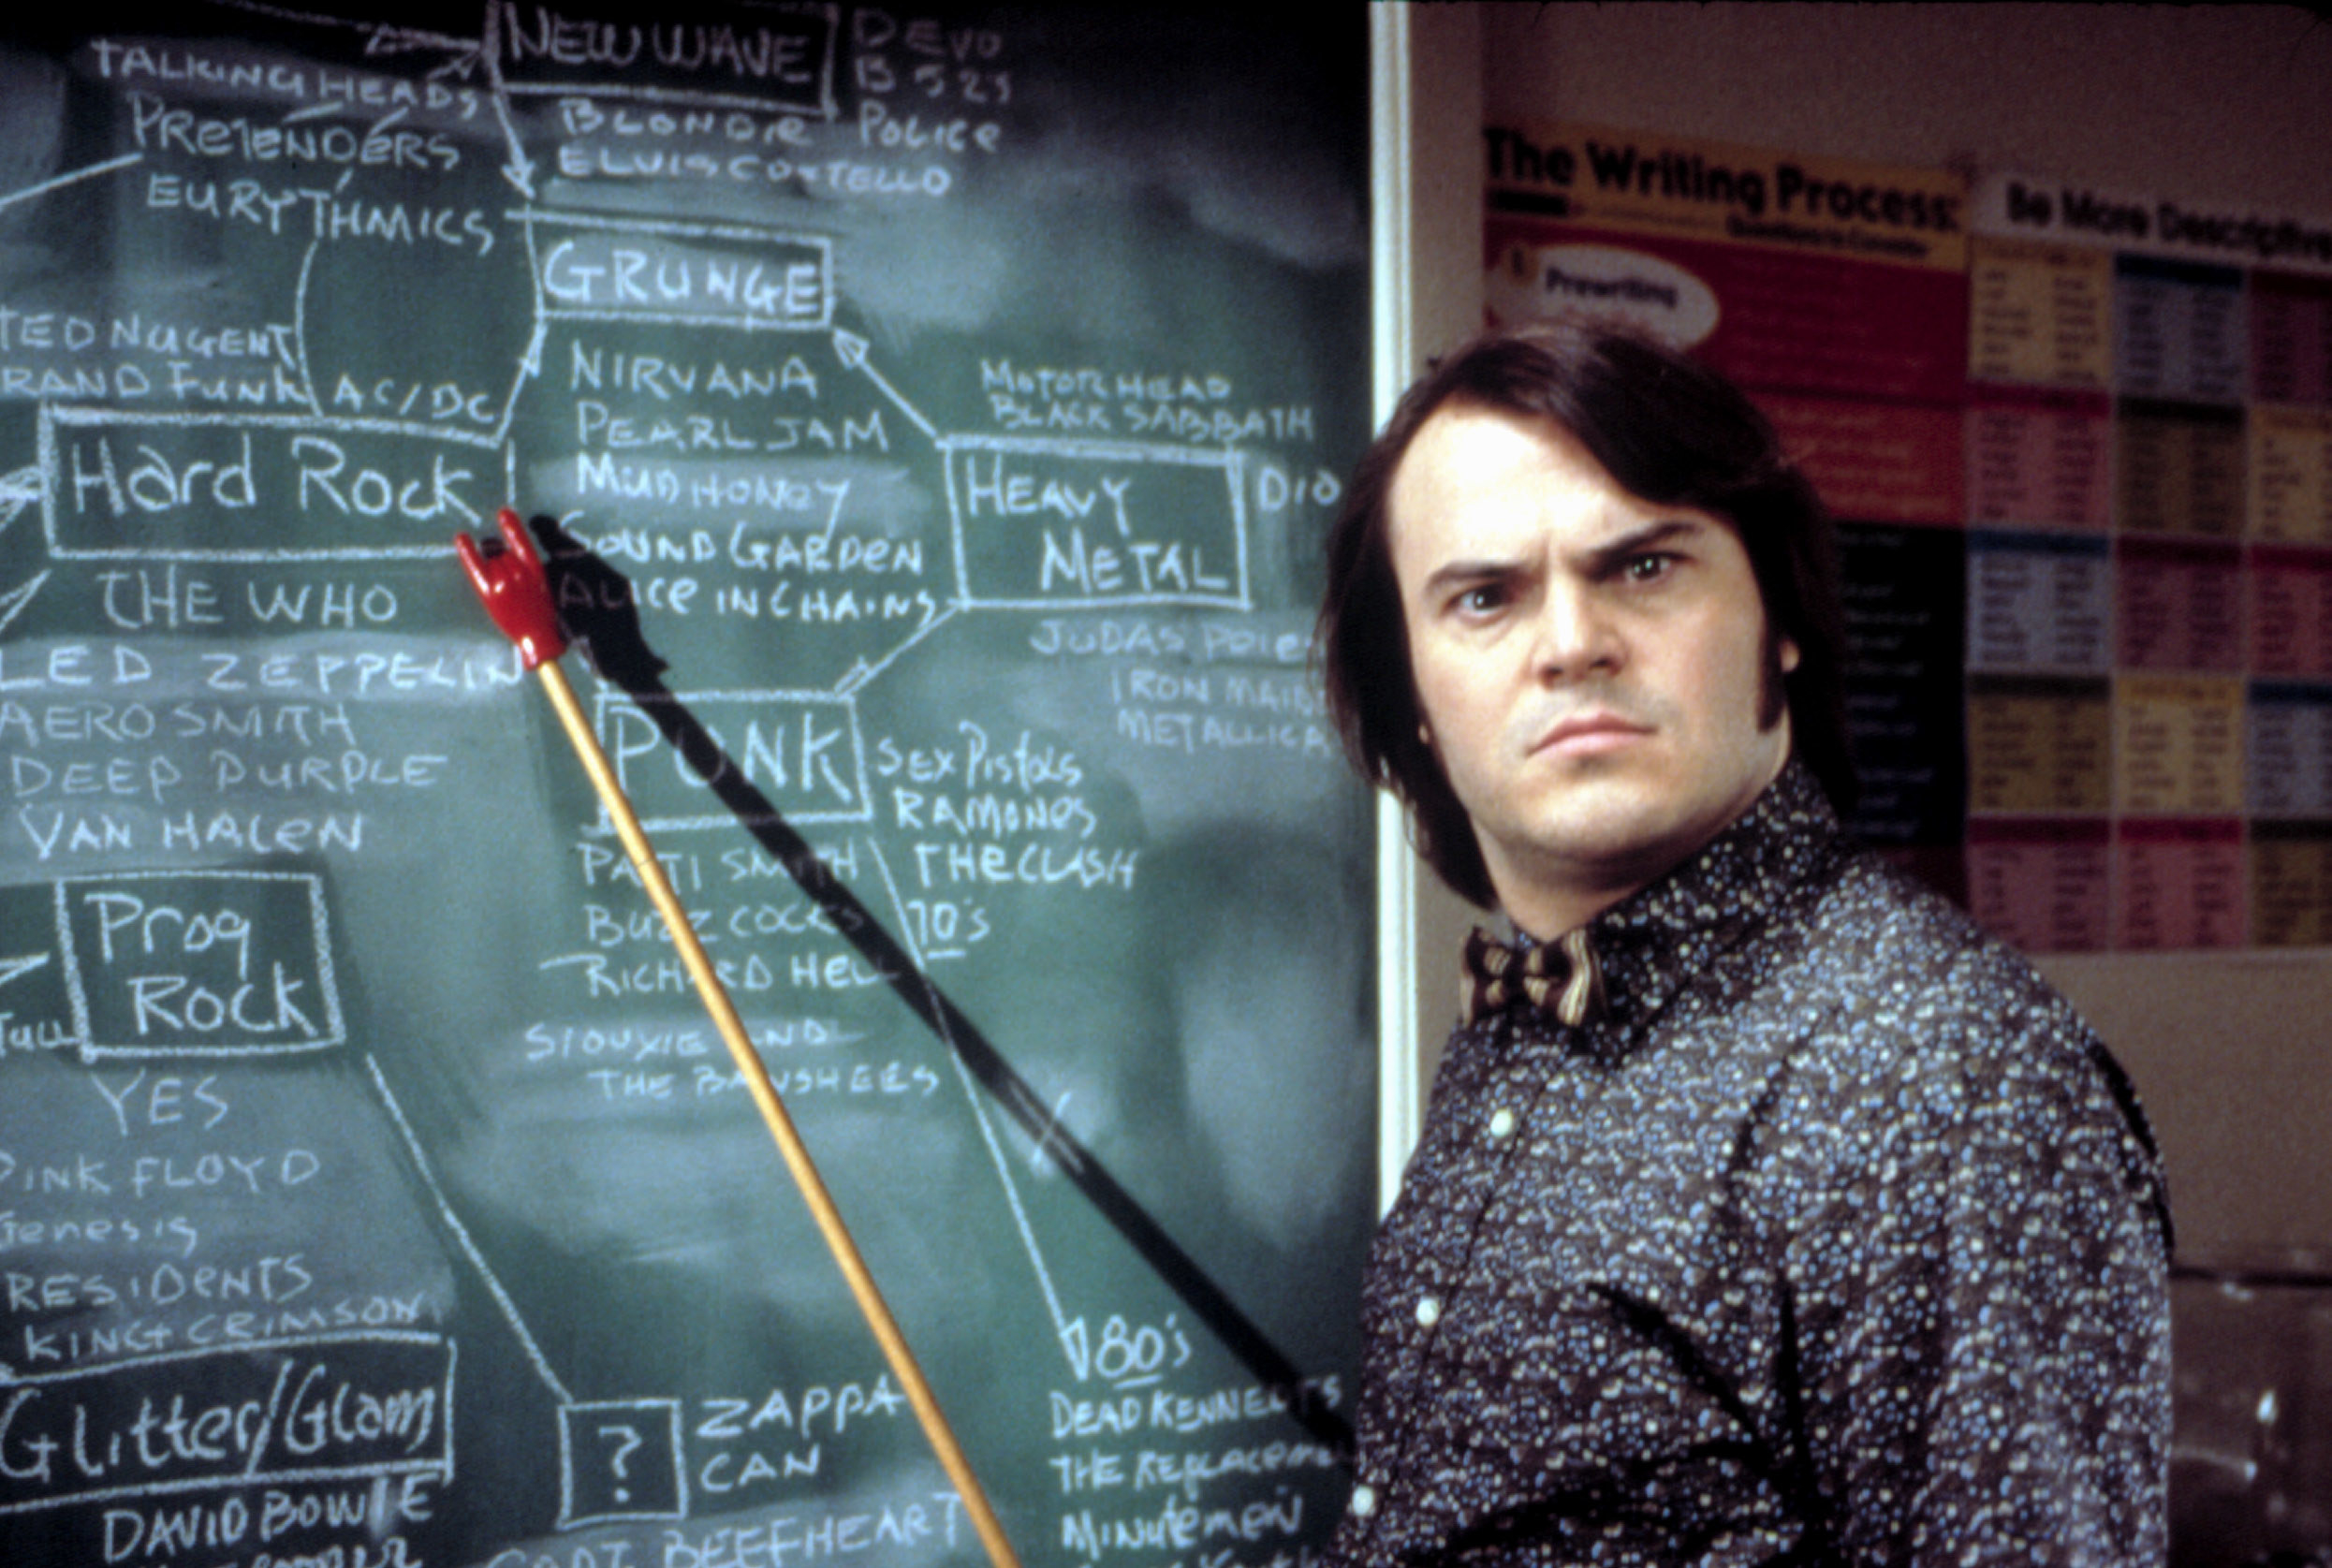 Jack Black instructing a classroom up at the blackboard